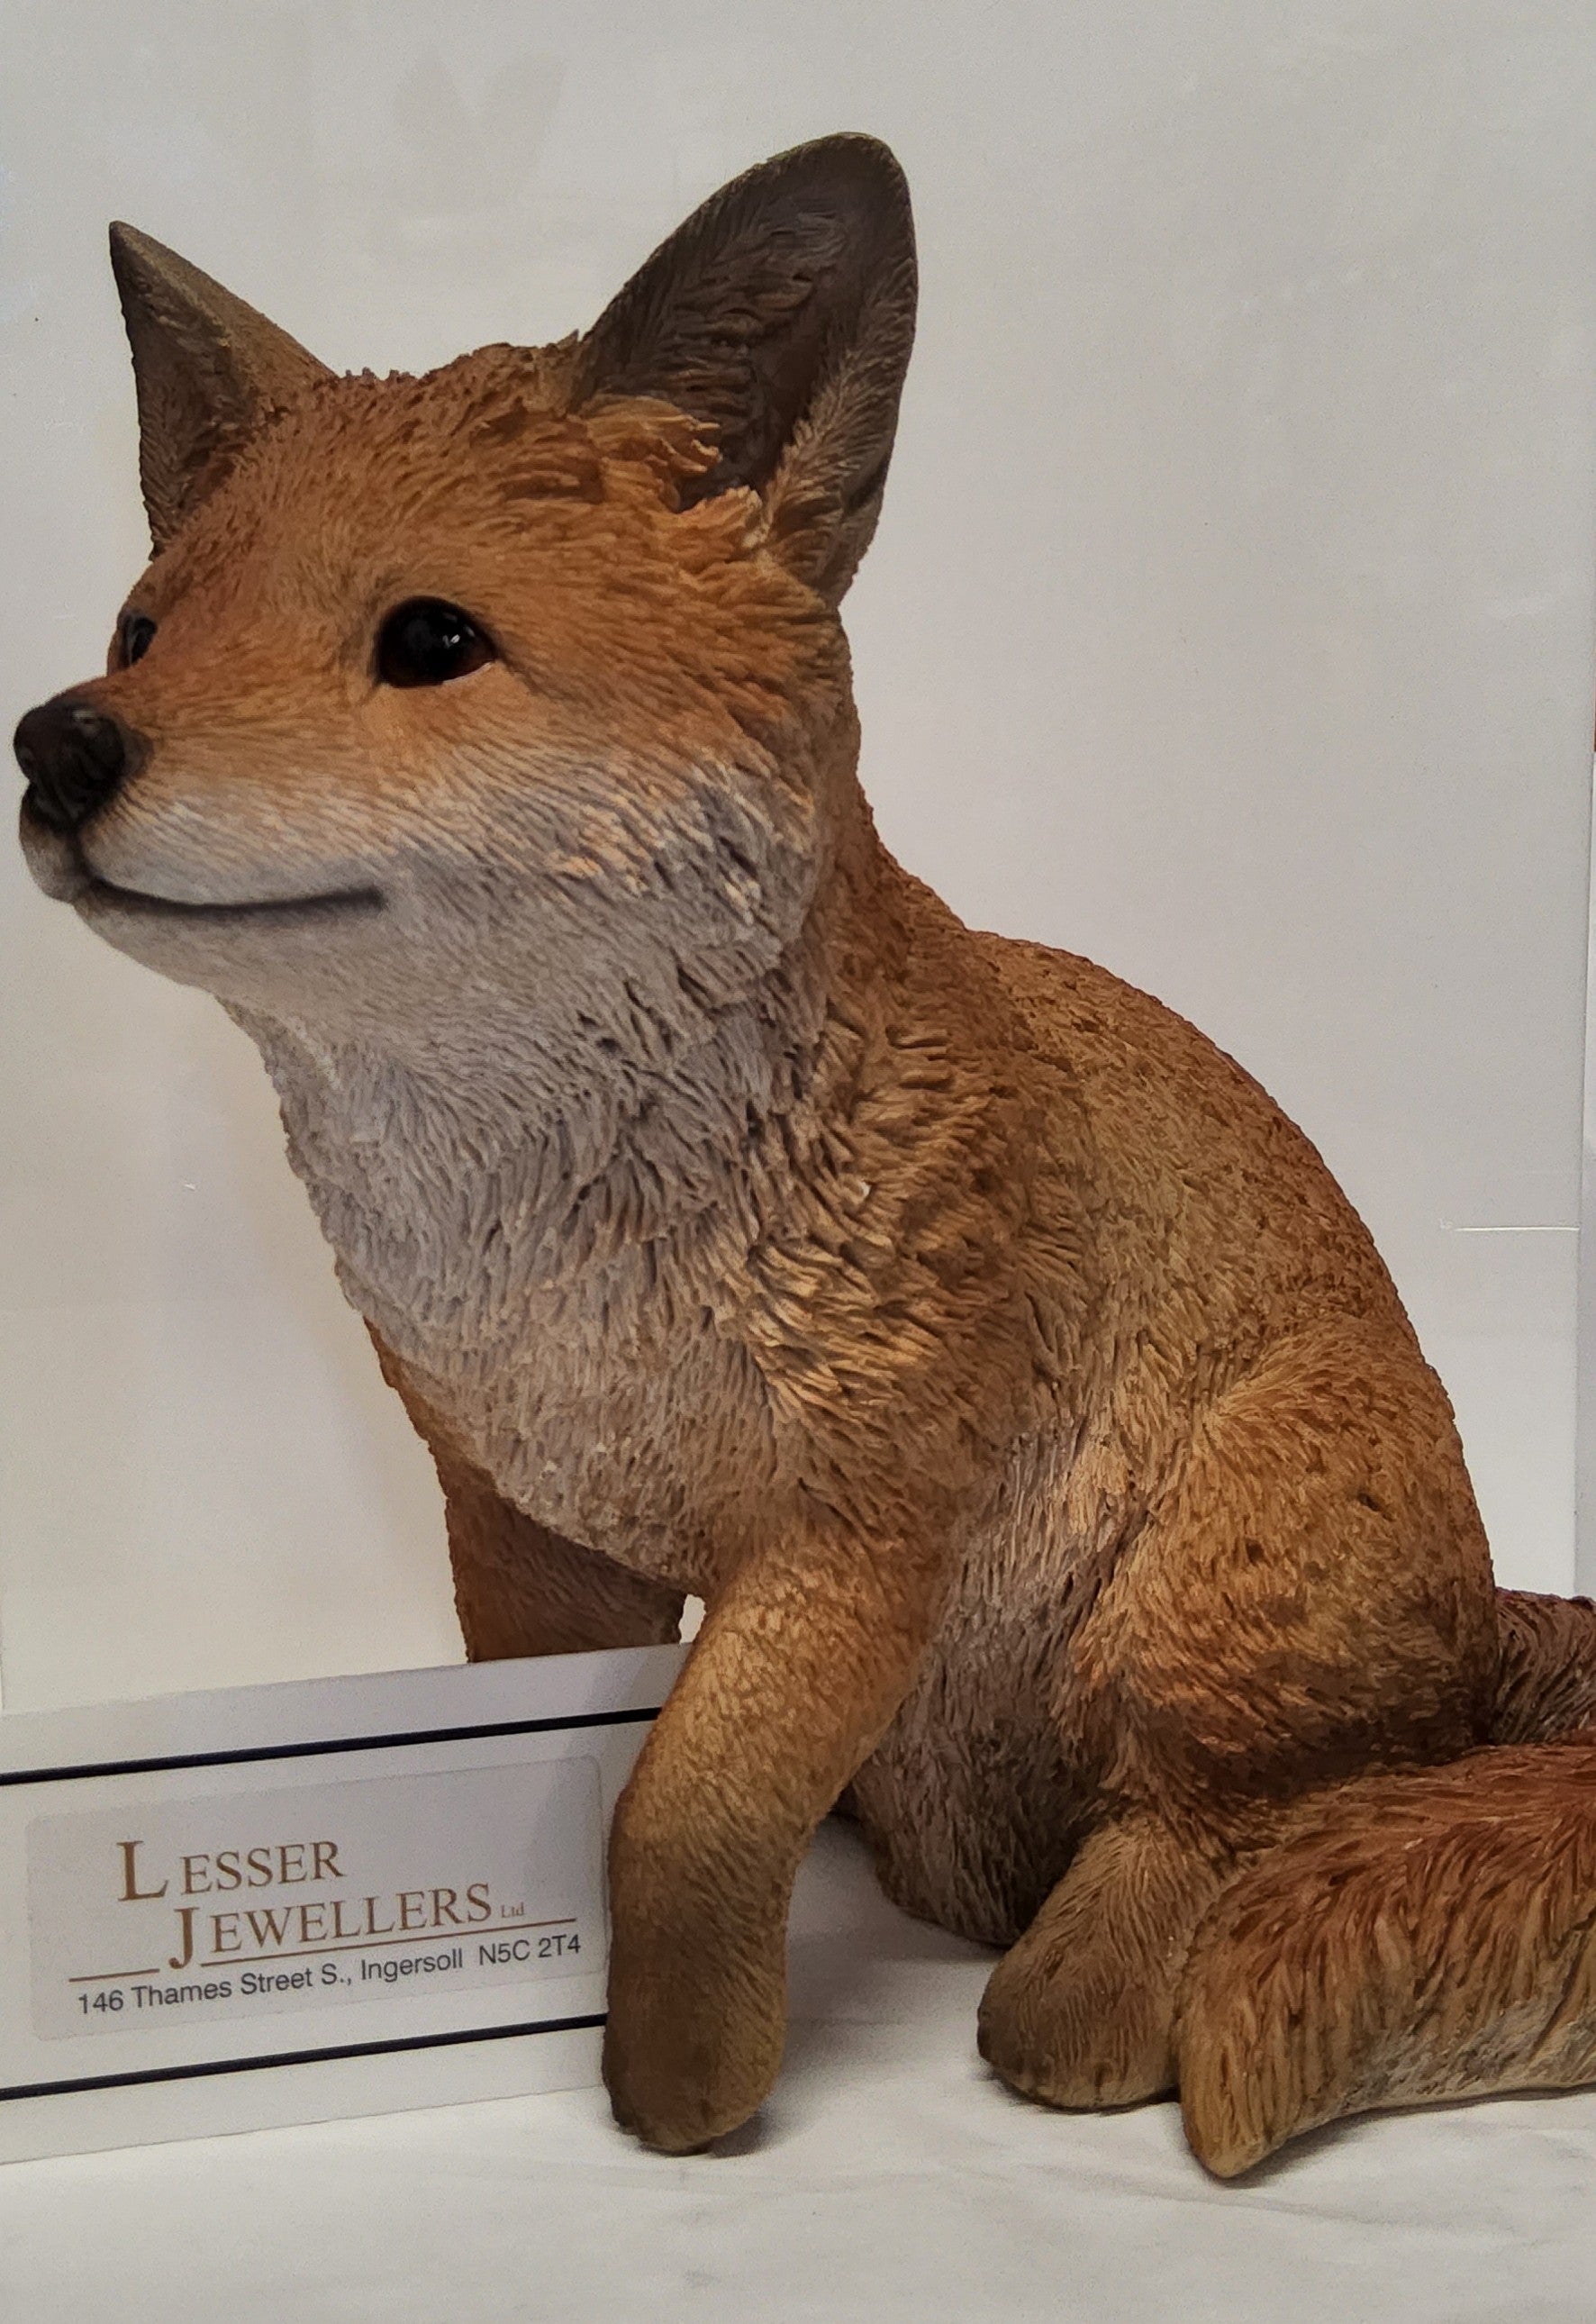 Animal Figurine - Fox Pup - Sitting 87719-E